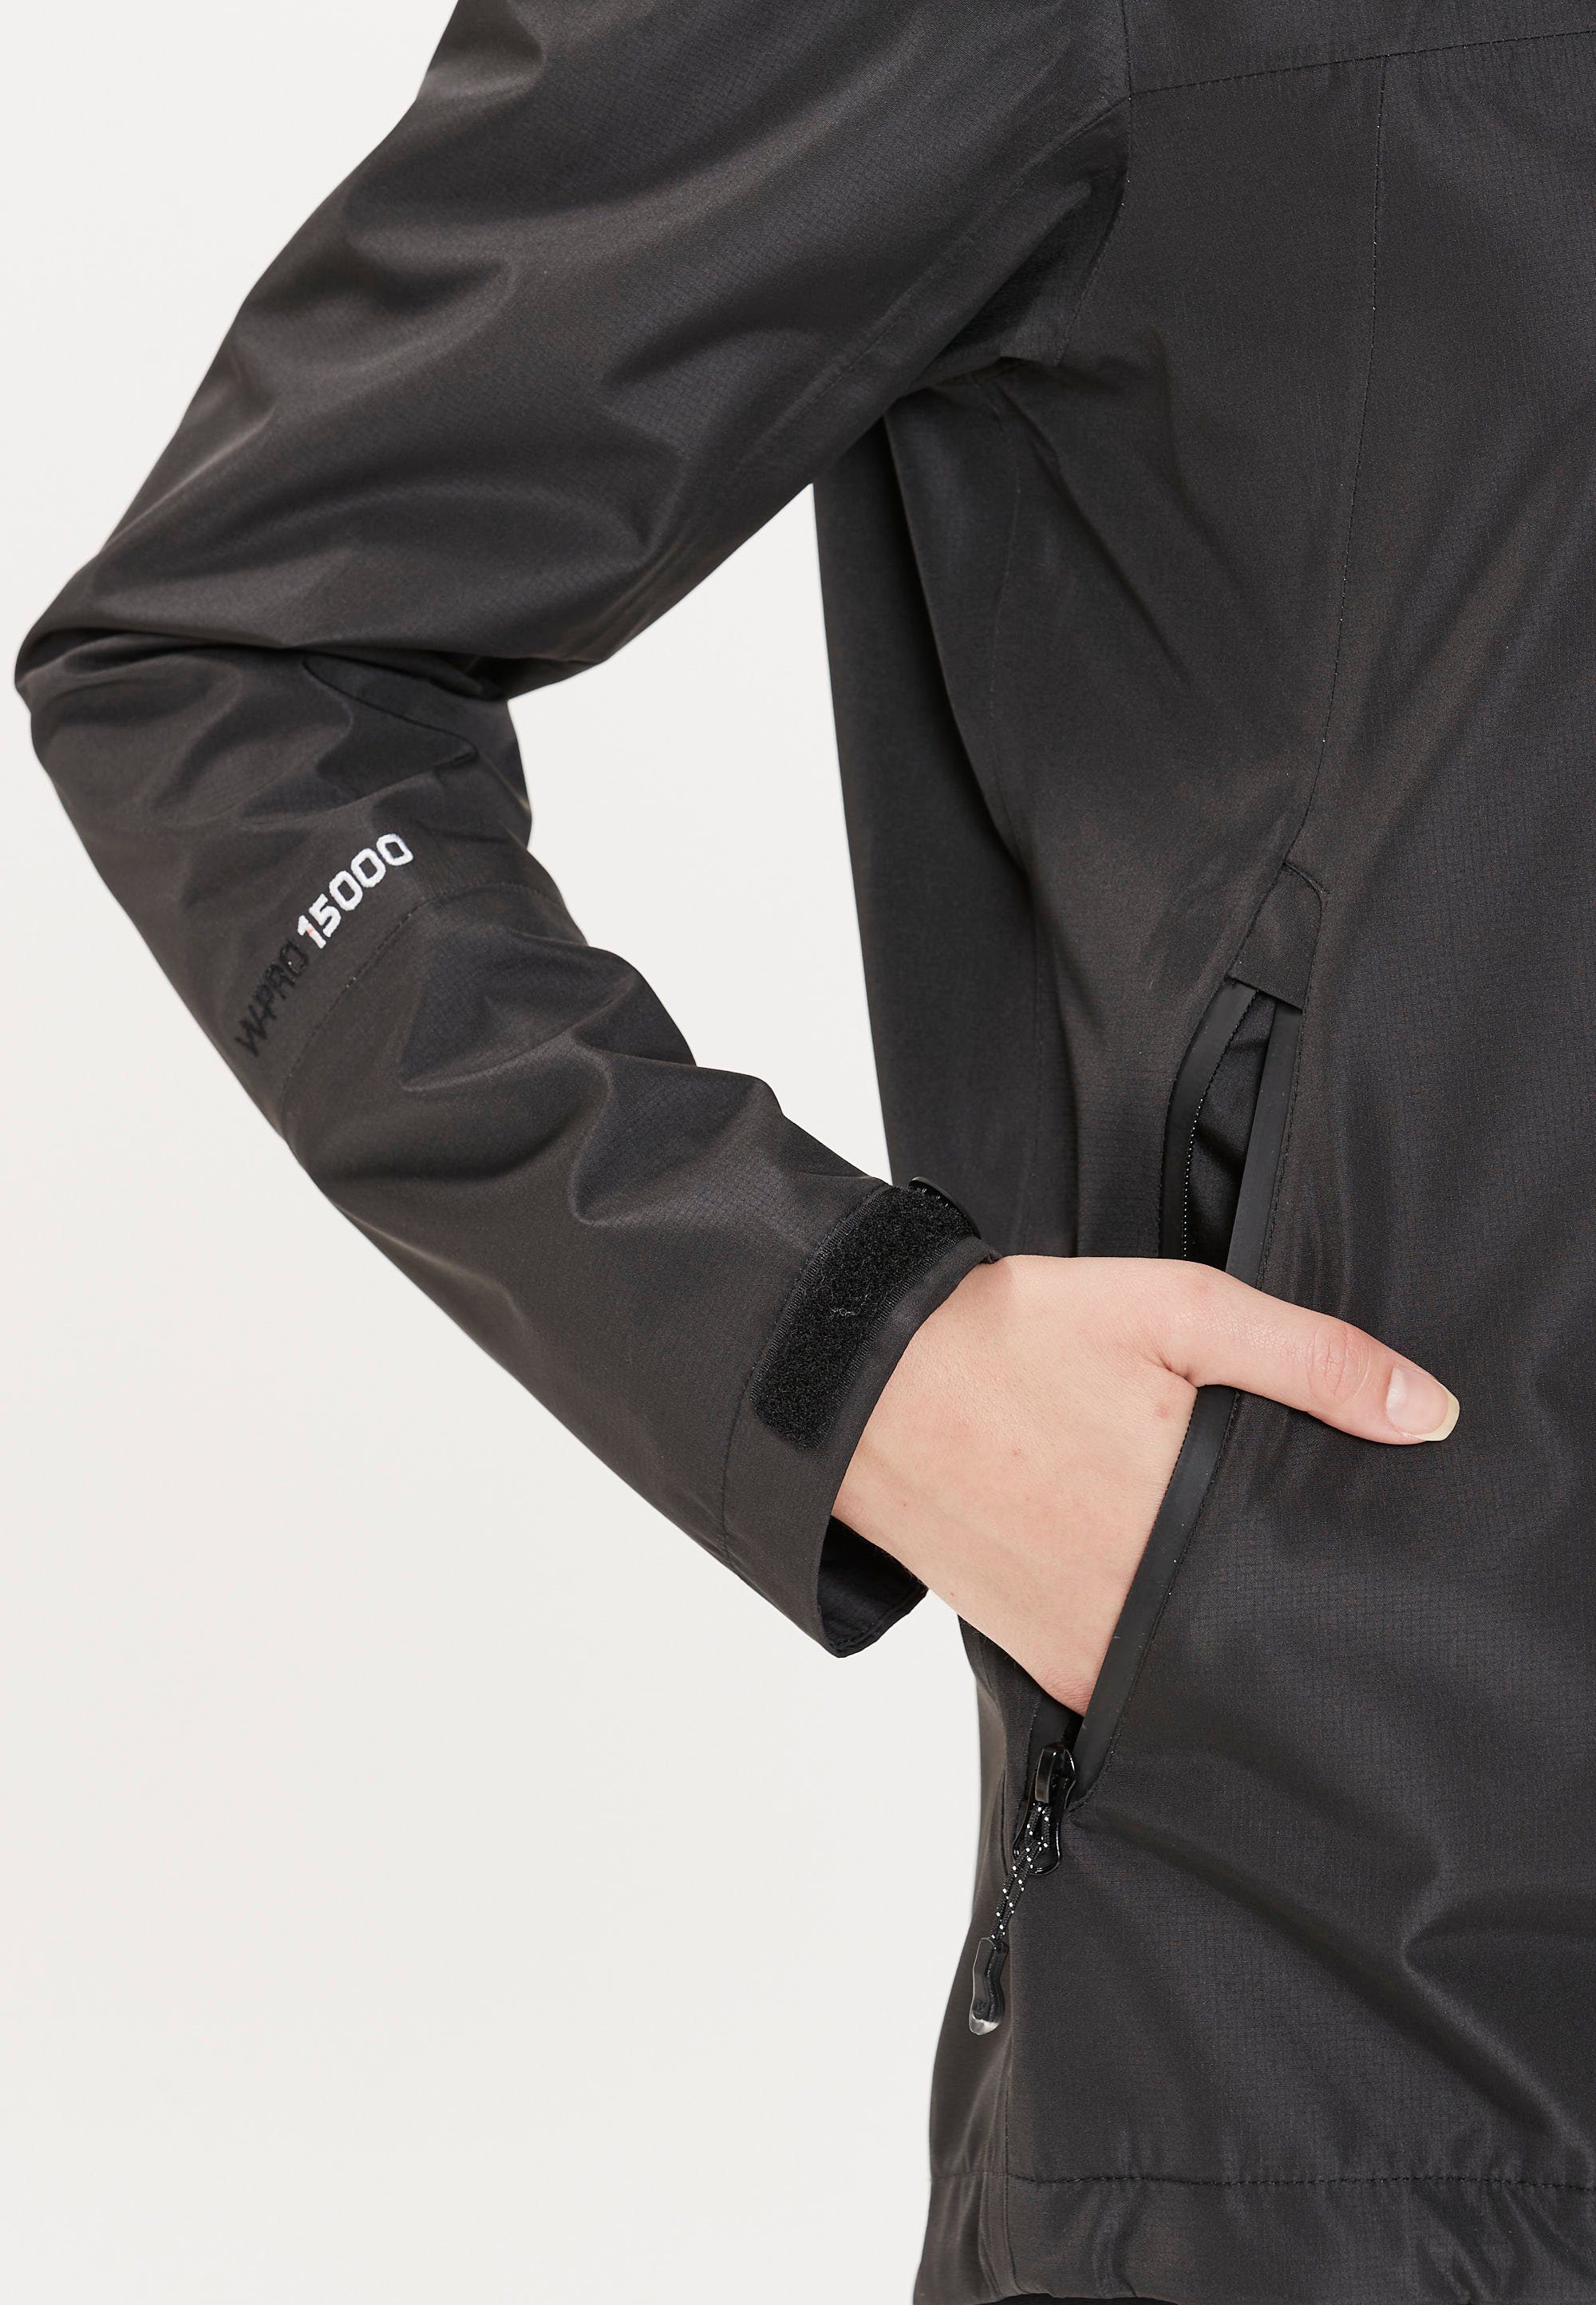 WHISTLER Softshelljacke BROOK W Shell mit Jacket Kapuze 15000 praktischer schwarz W-PRO